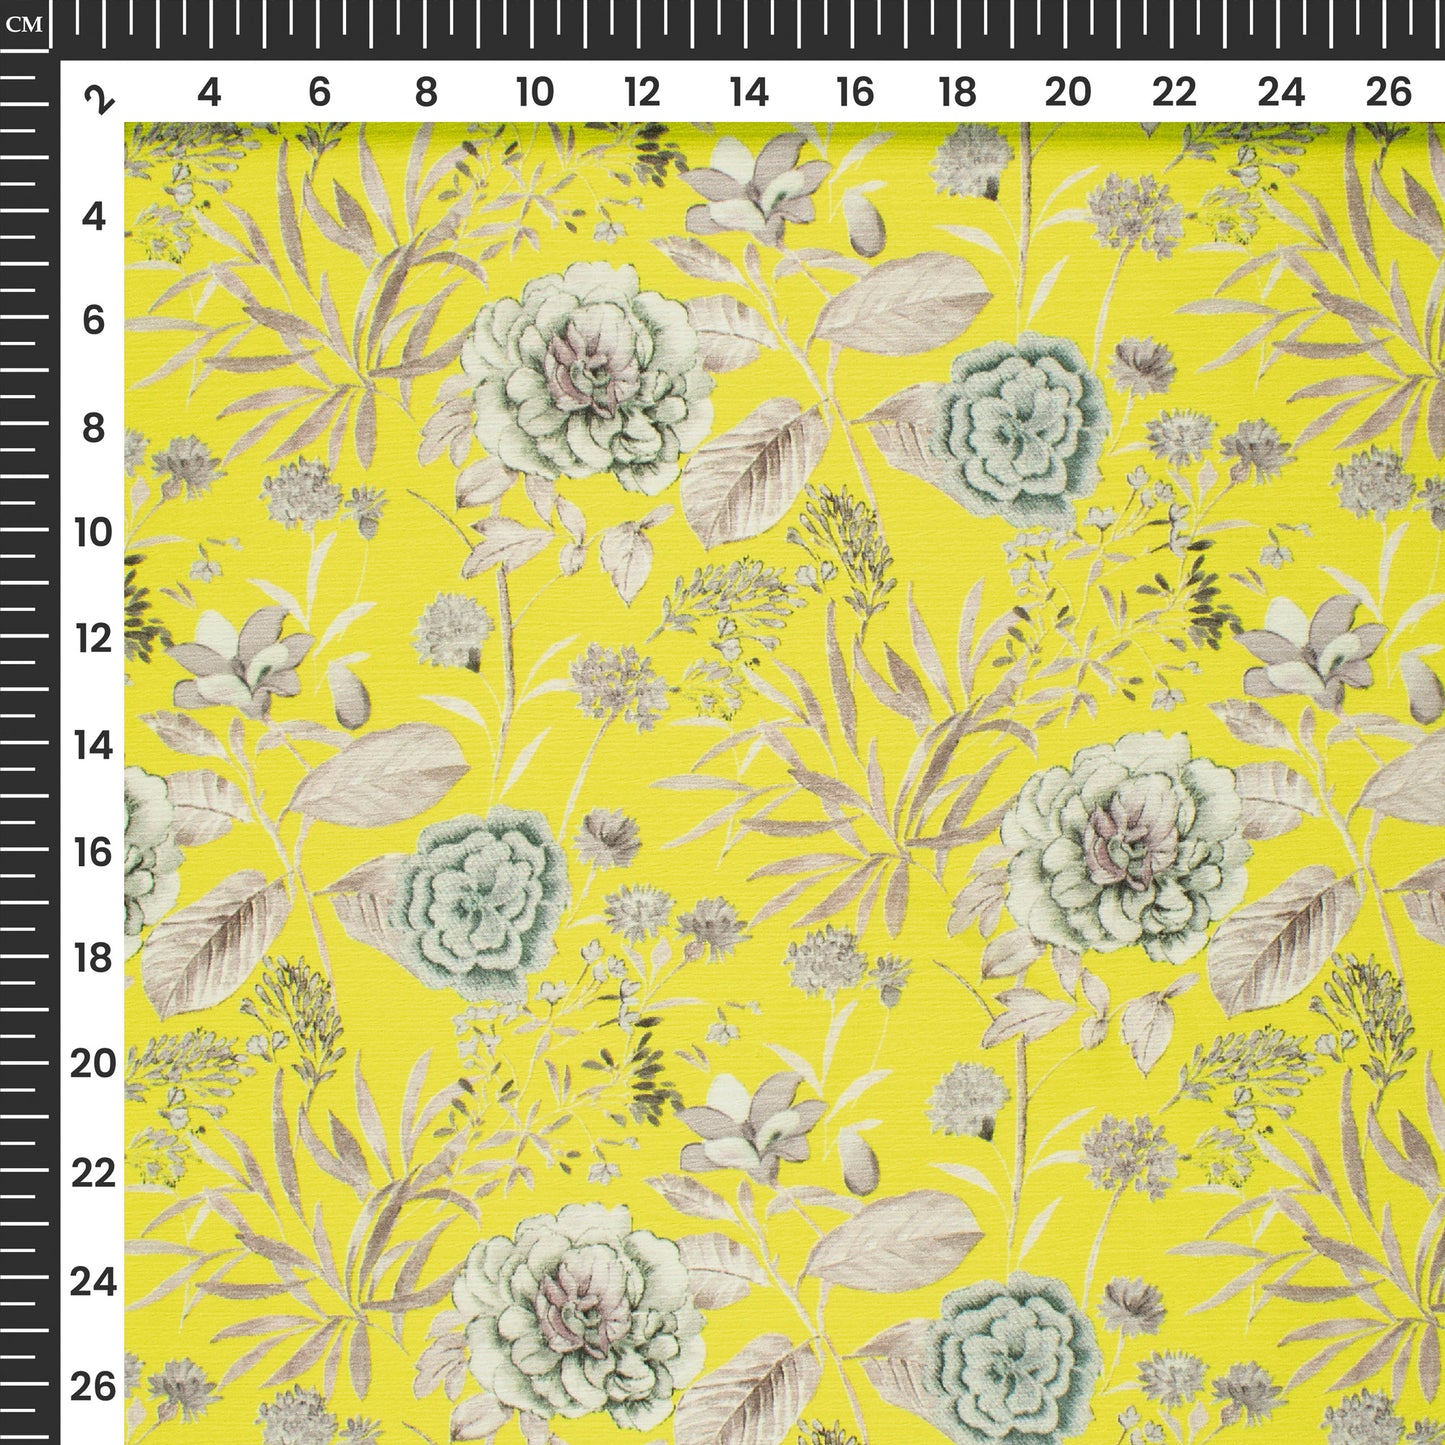 Lovely Floral Digital Print Chiffon Satin Fabric